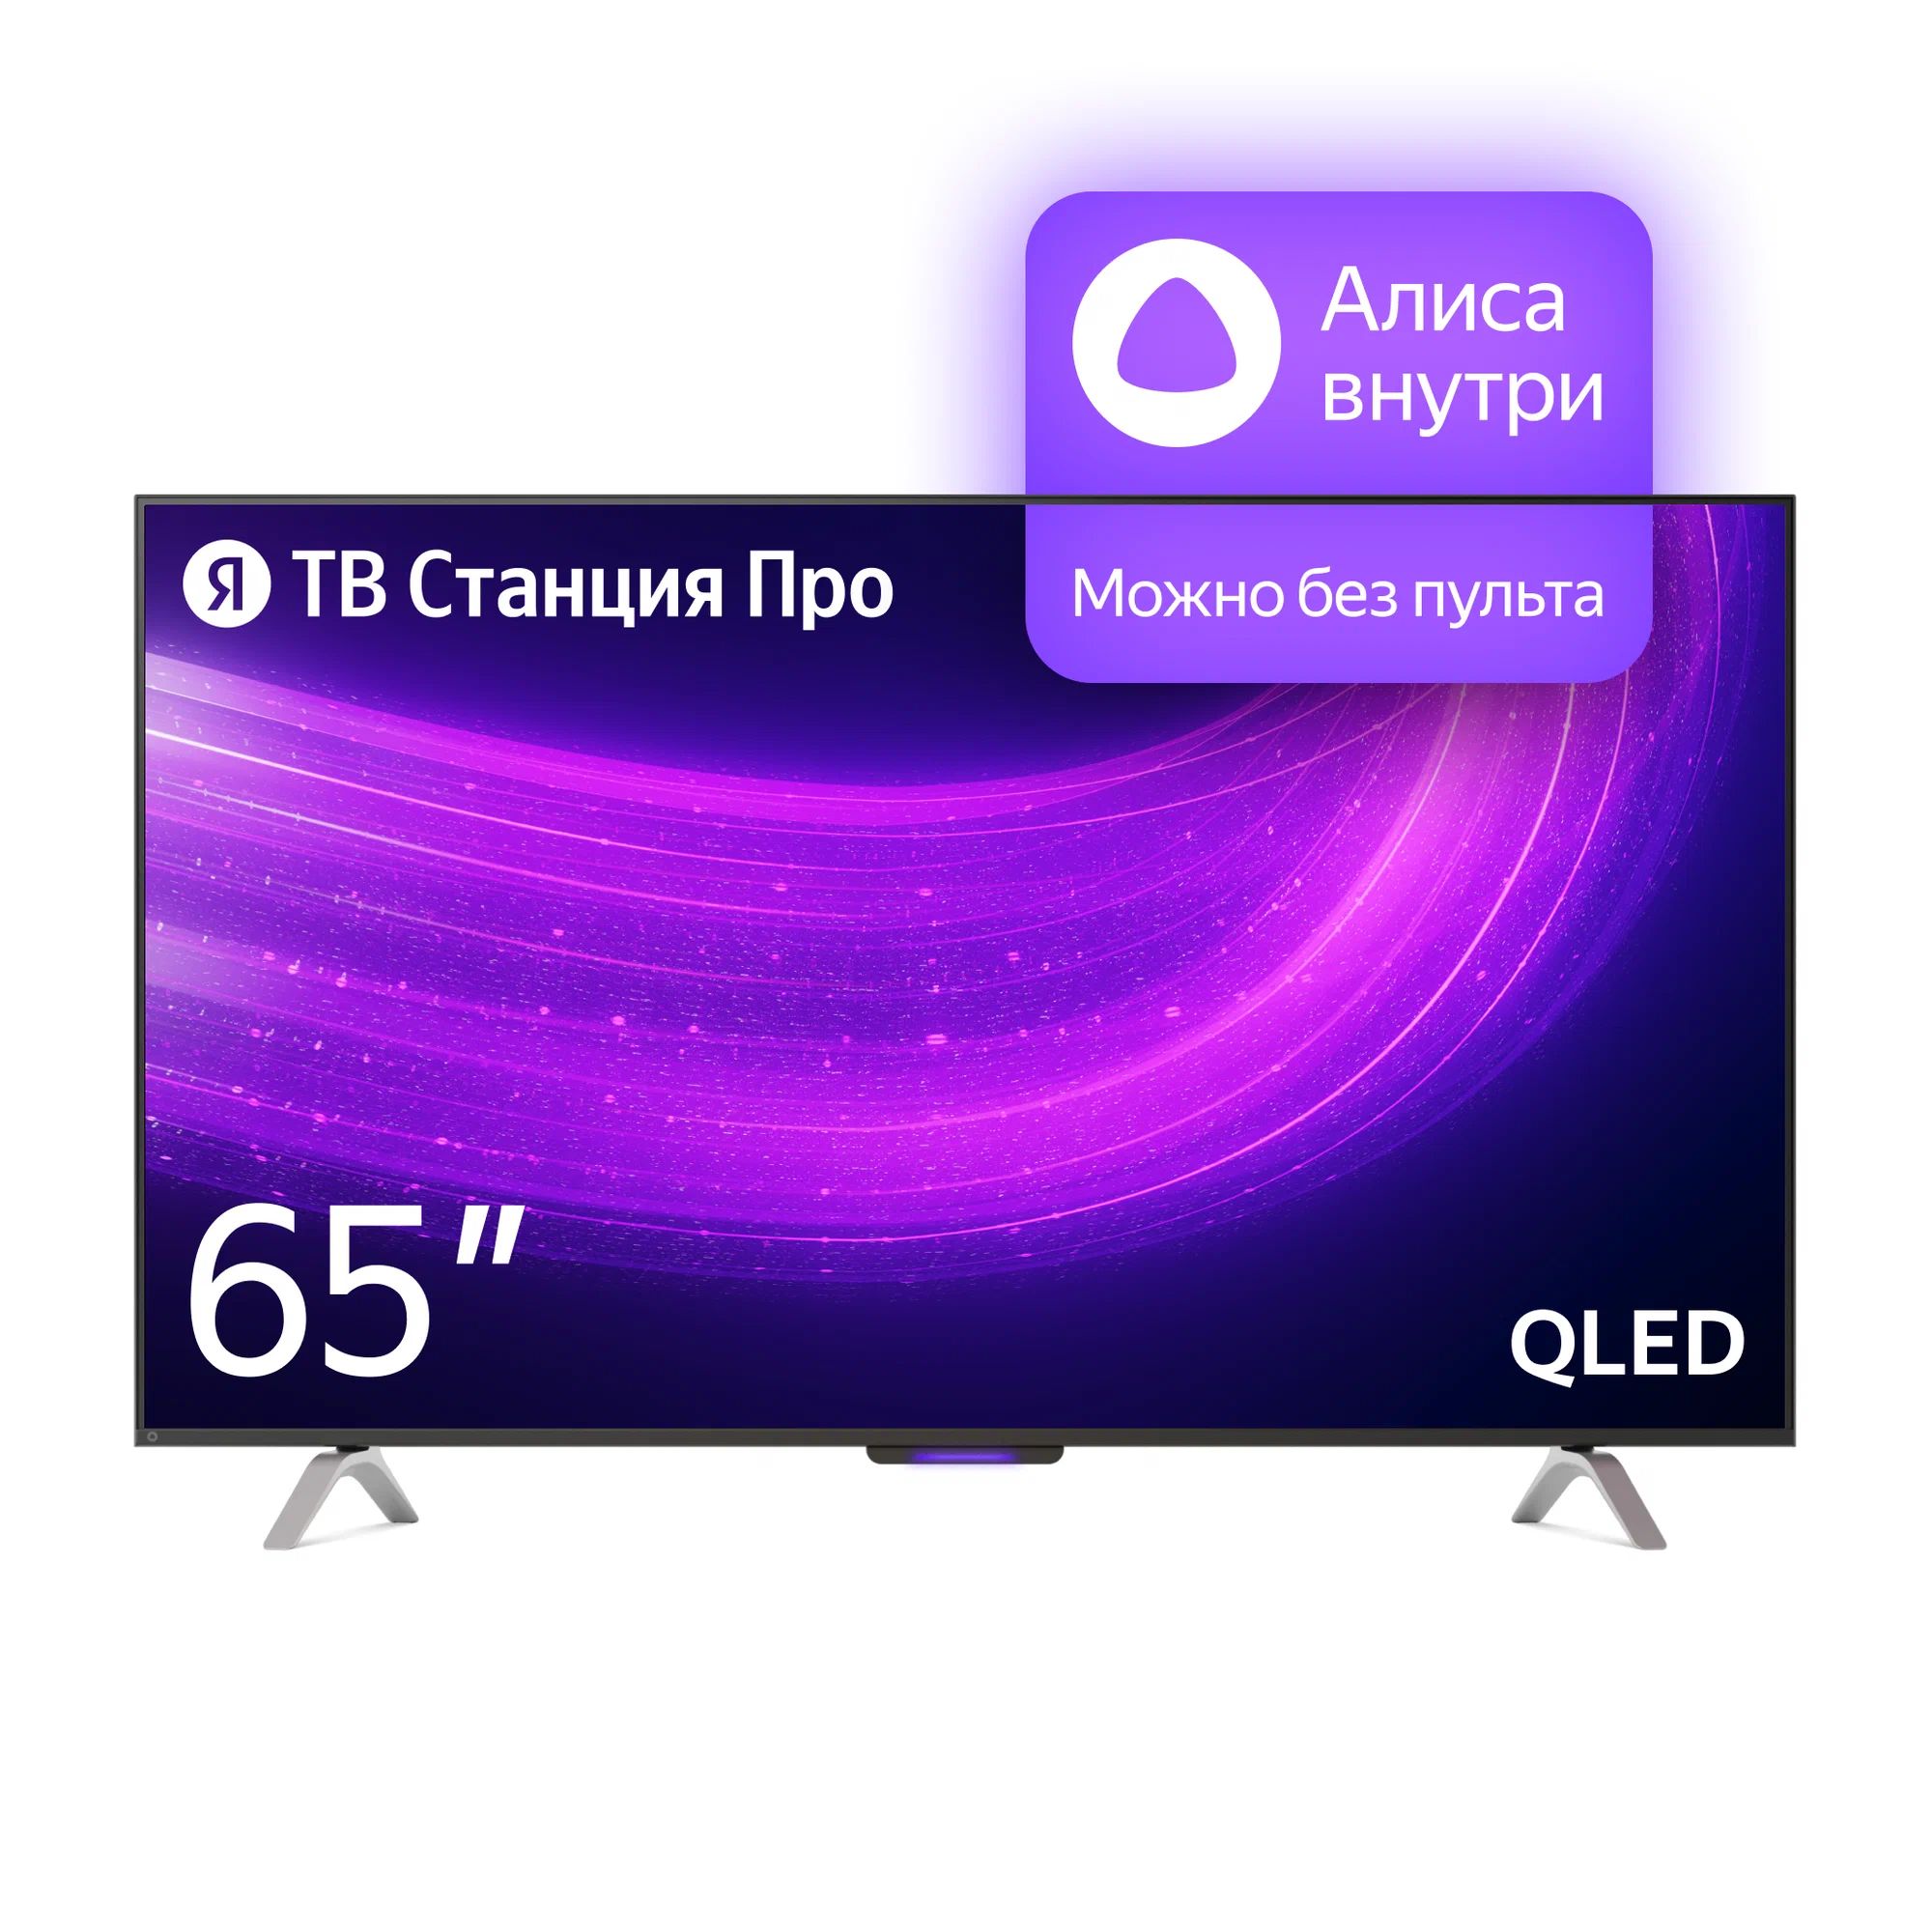 Телевизор Яндекс YNDX-00102 PRO Тв станция с Алисой 65 телевизор яндекс 50 умный телевизор с алисой yndx 00072